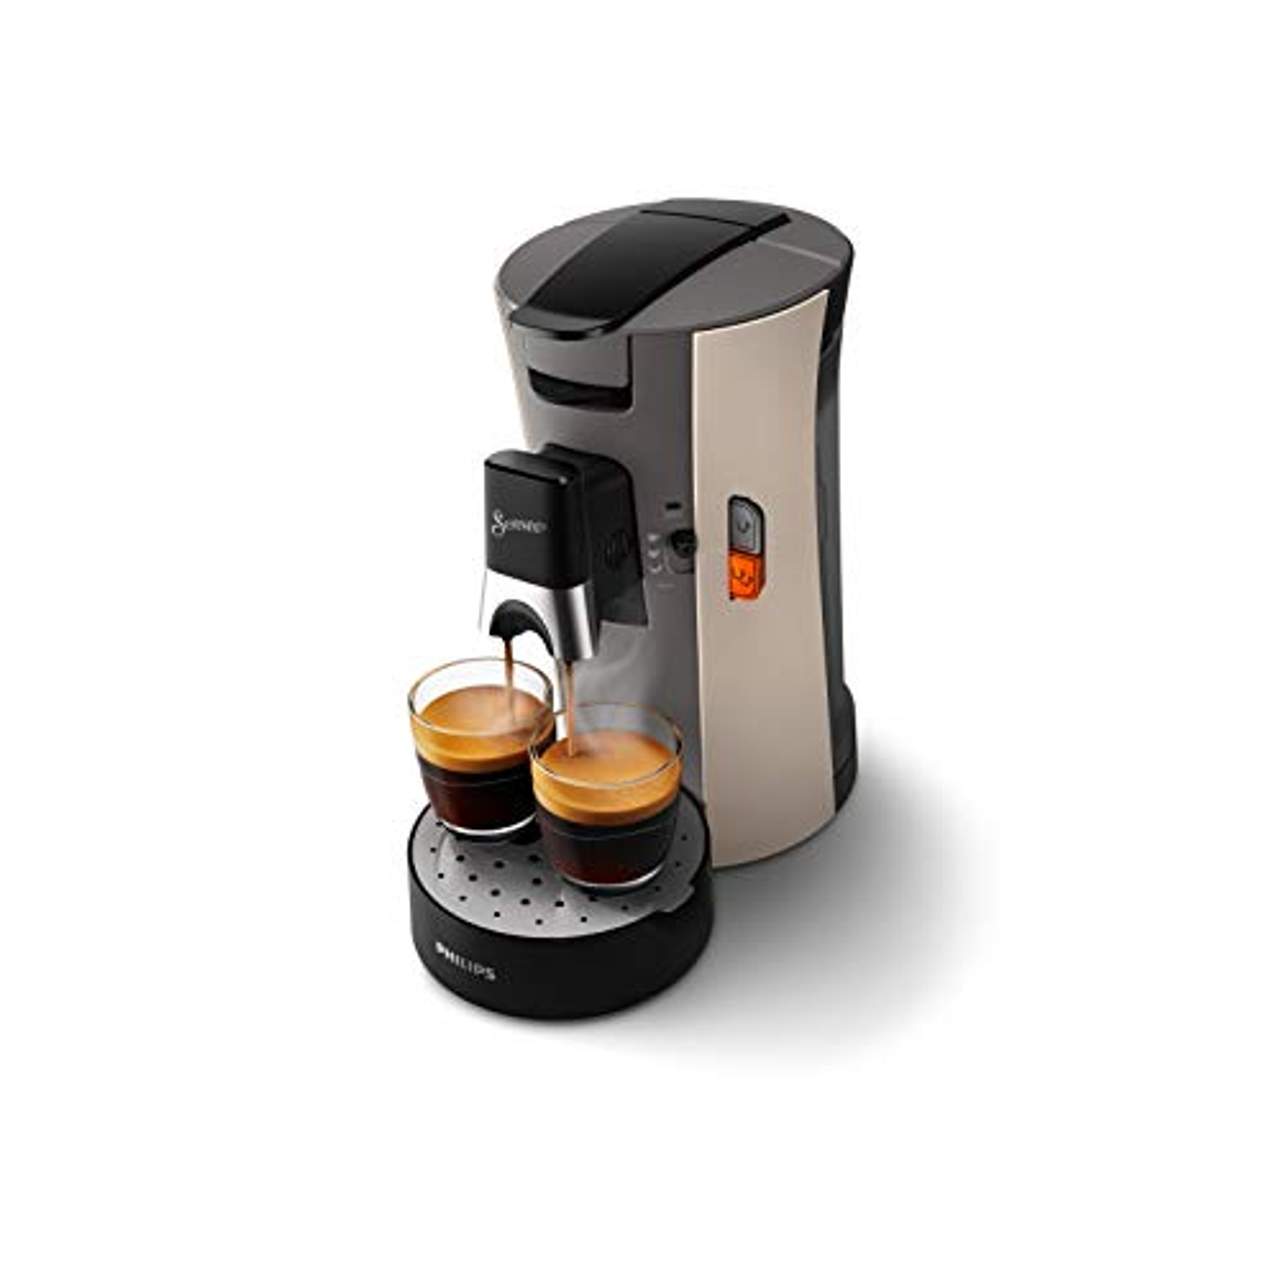 Philips Domestic Appliances CSA240/31 Kaffeepadmaschine Senseo Select Eco